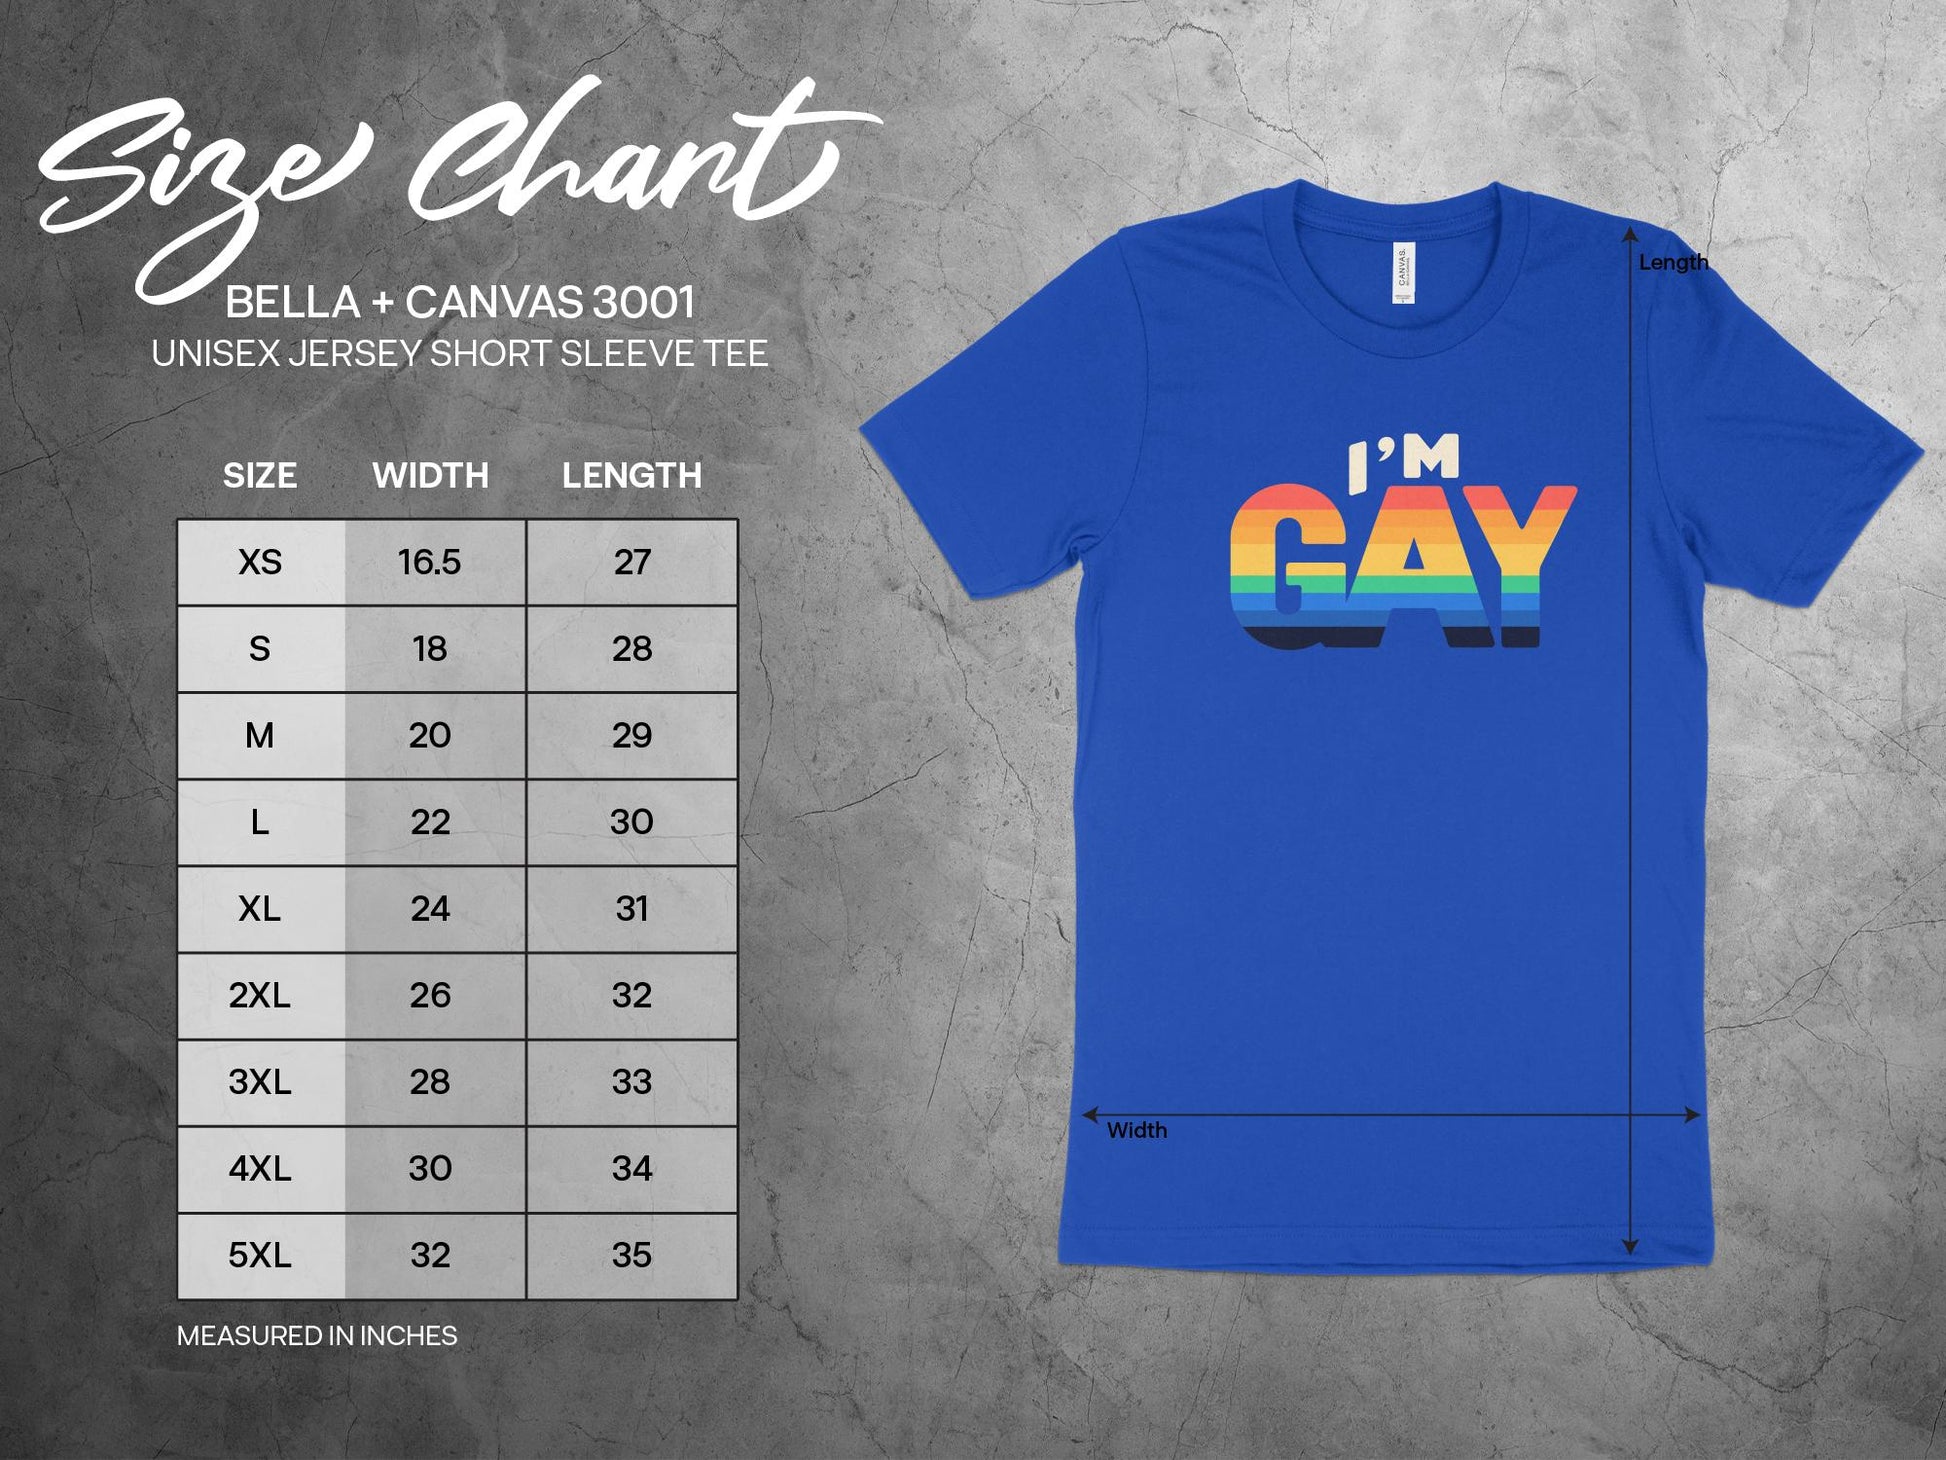 I'm Gay Shirt, sizing chart